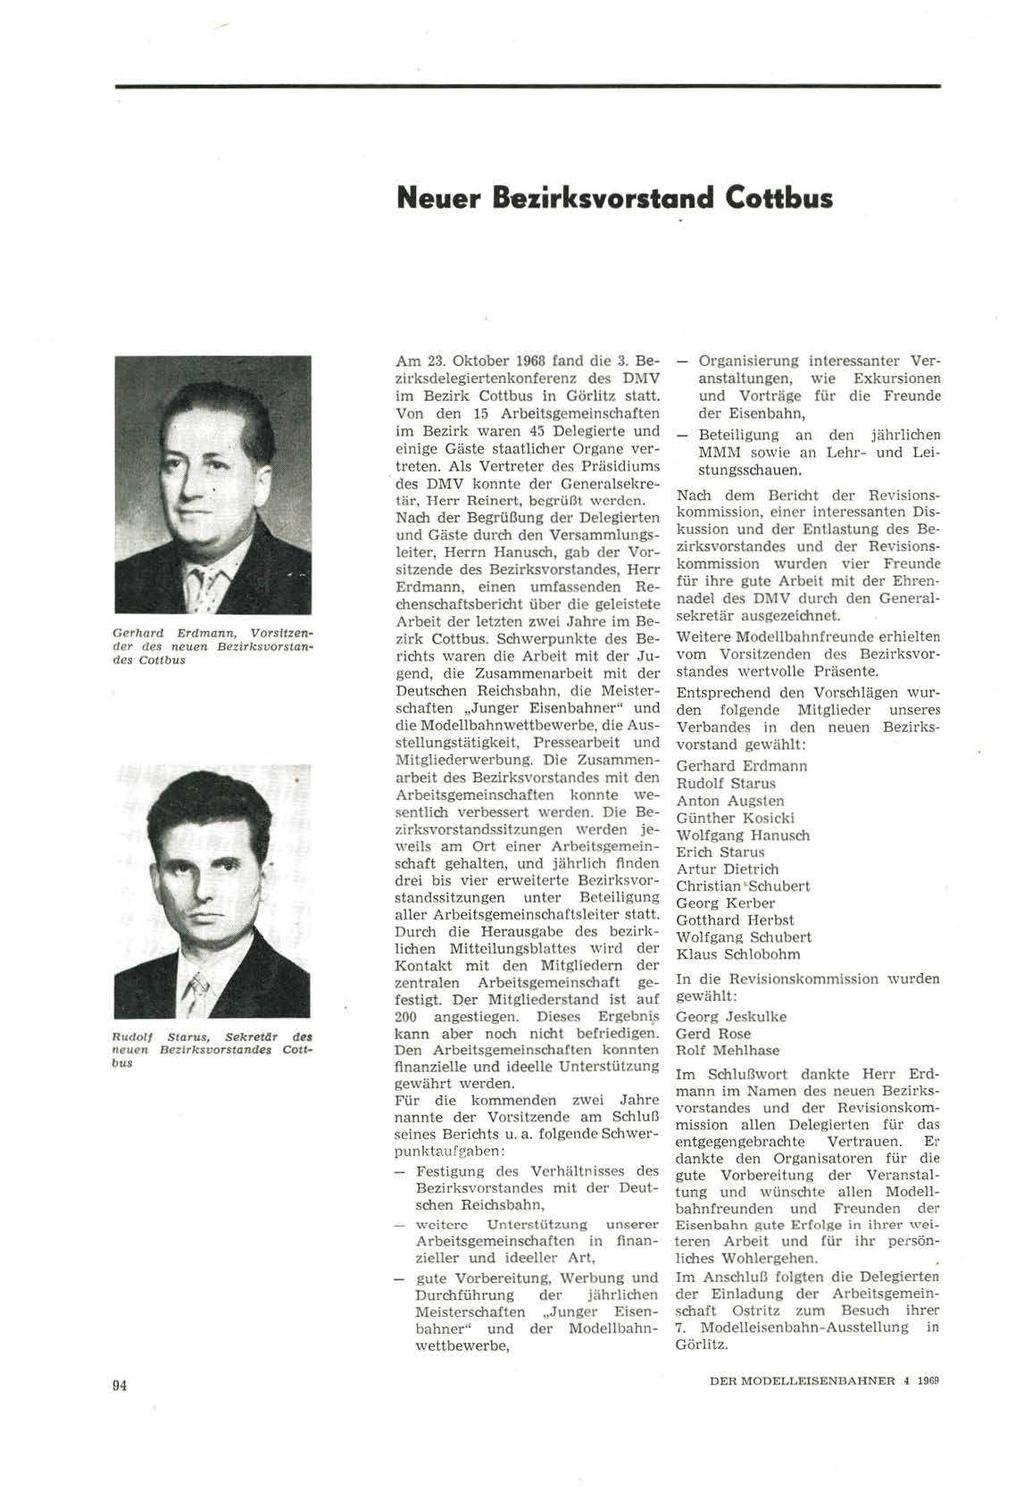 Neuer Bezirksvorstand Cottbus Oerhard Erdmann, Vorsitzender des neuen Bezirksvorstandes Cottbus Rudolf Starus, Sekret/fr dea neuen Bezirksvorstandes Cotl bus 94 Am 23. Oktober 1968 fand die 3.